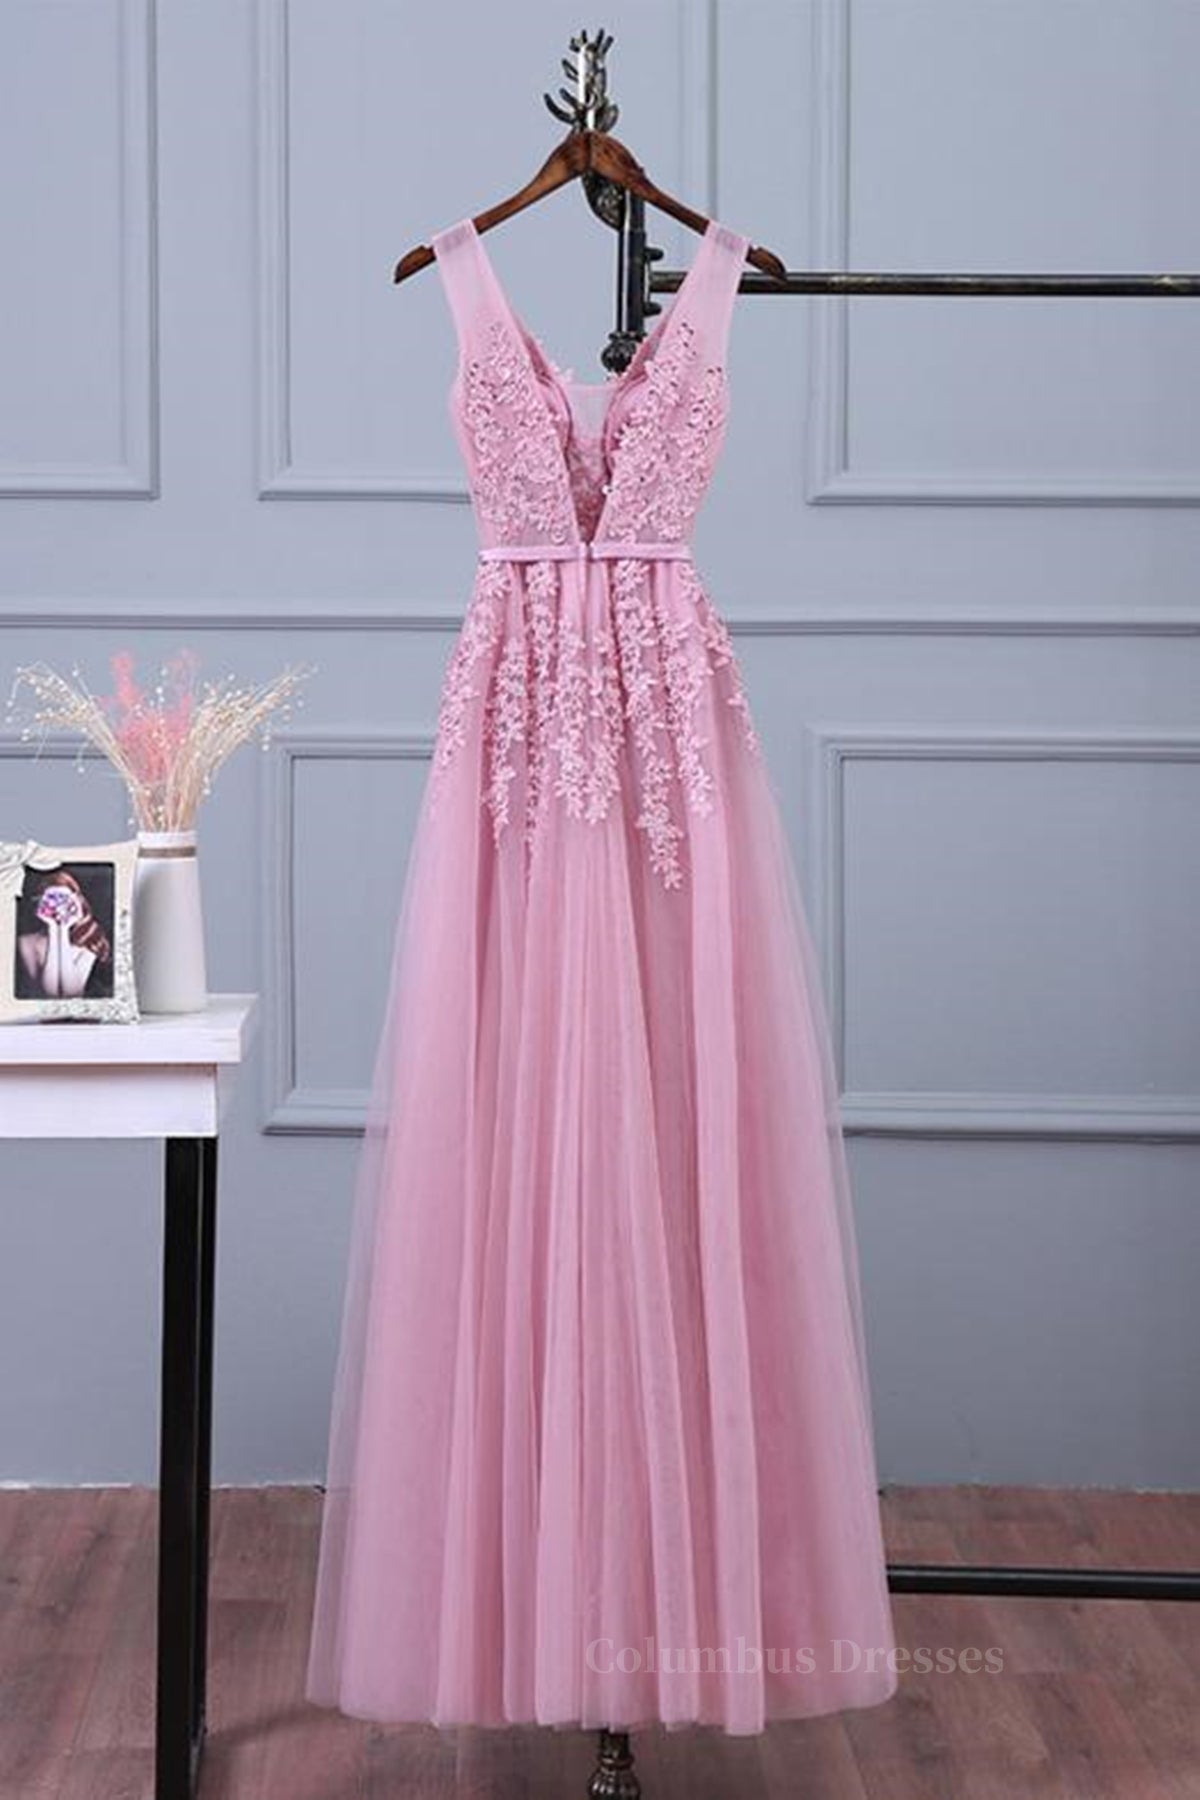 Dream Wedding, V Neck Pink Lace Prom Dresses, Pink V Neck Lace Bridesmaid Formal Dresses